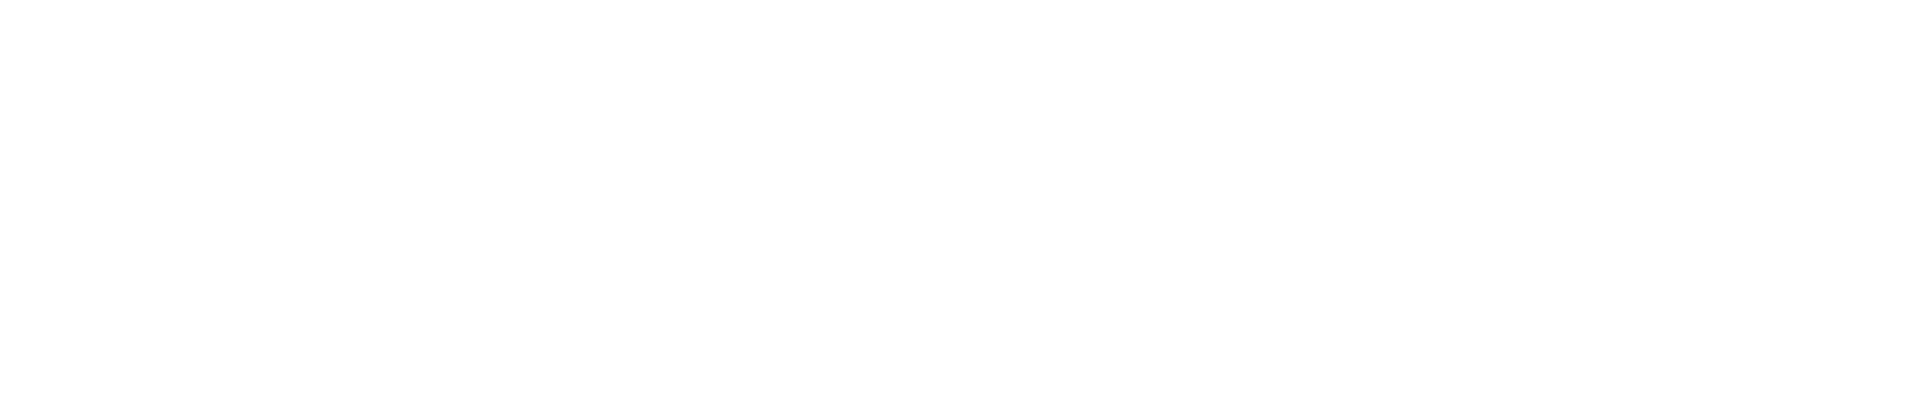 quartzcollection